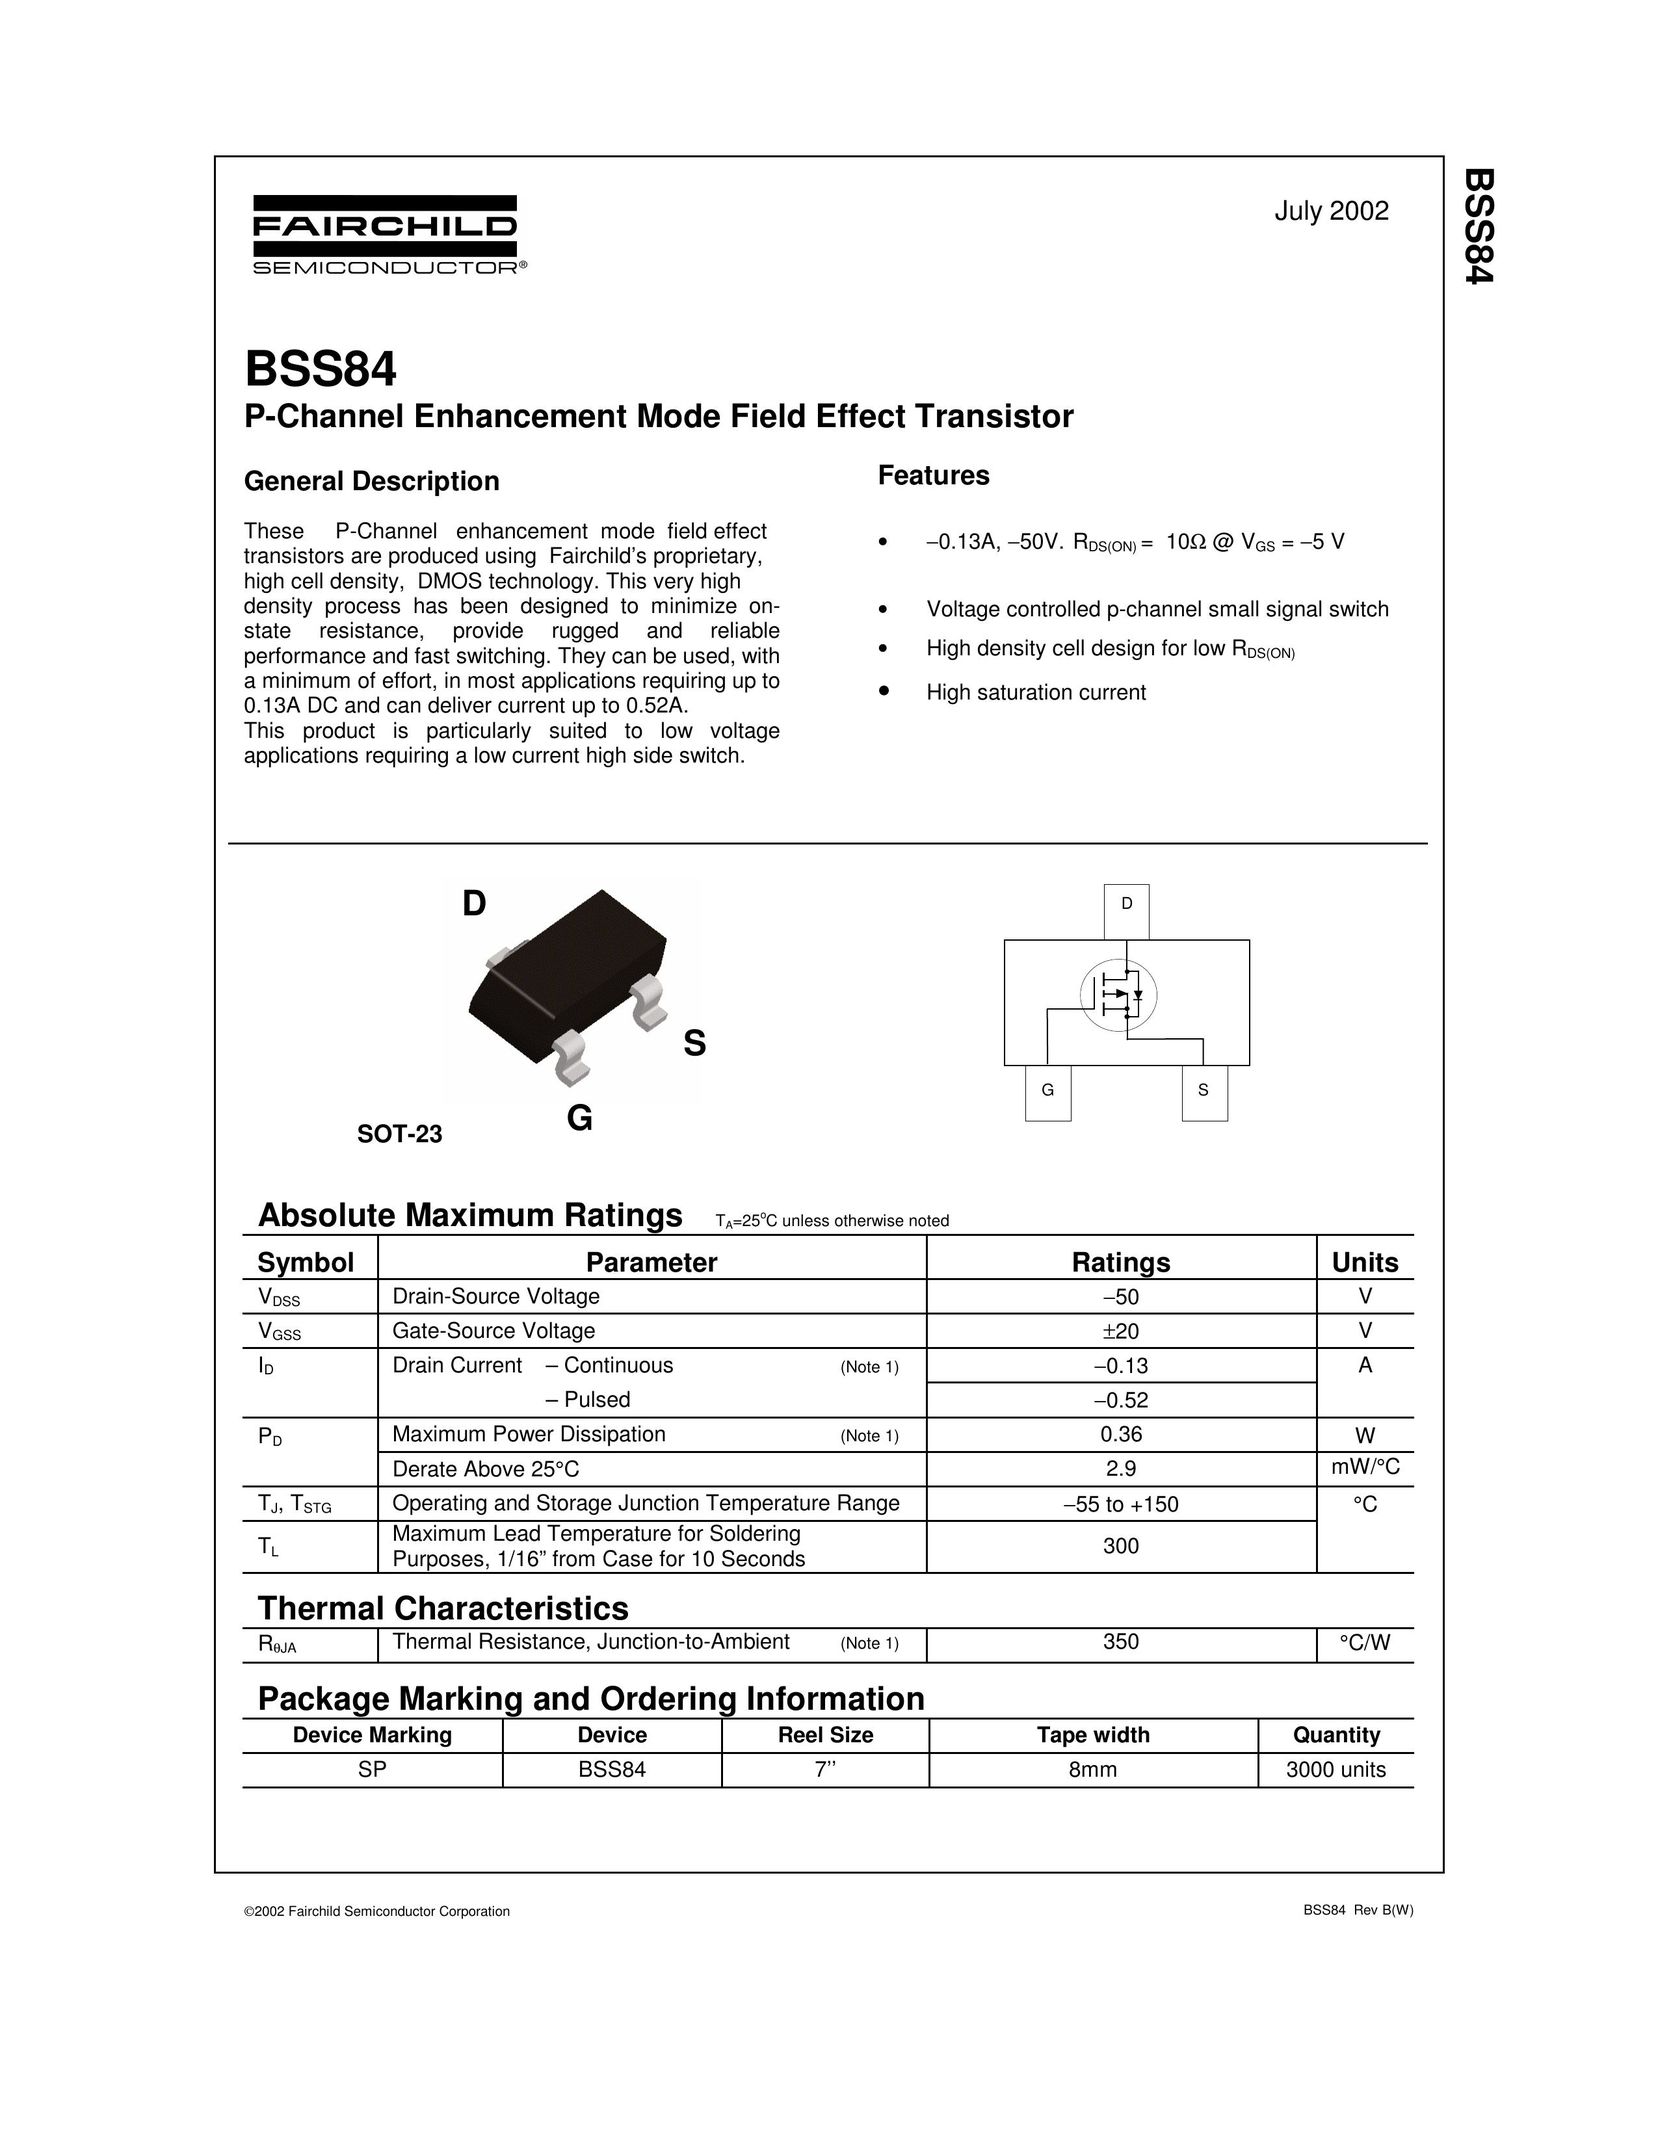 Fairchild BSS84 Stereo Receiver User Manual